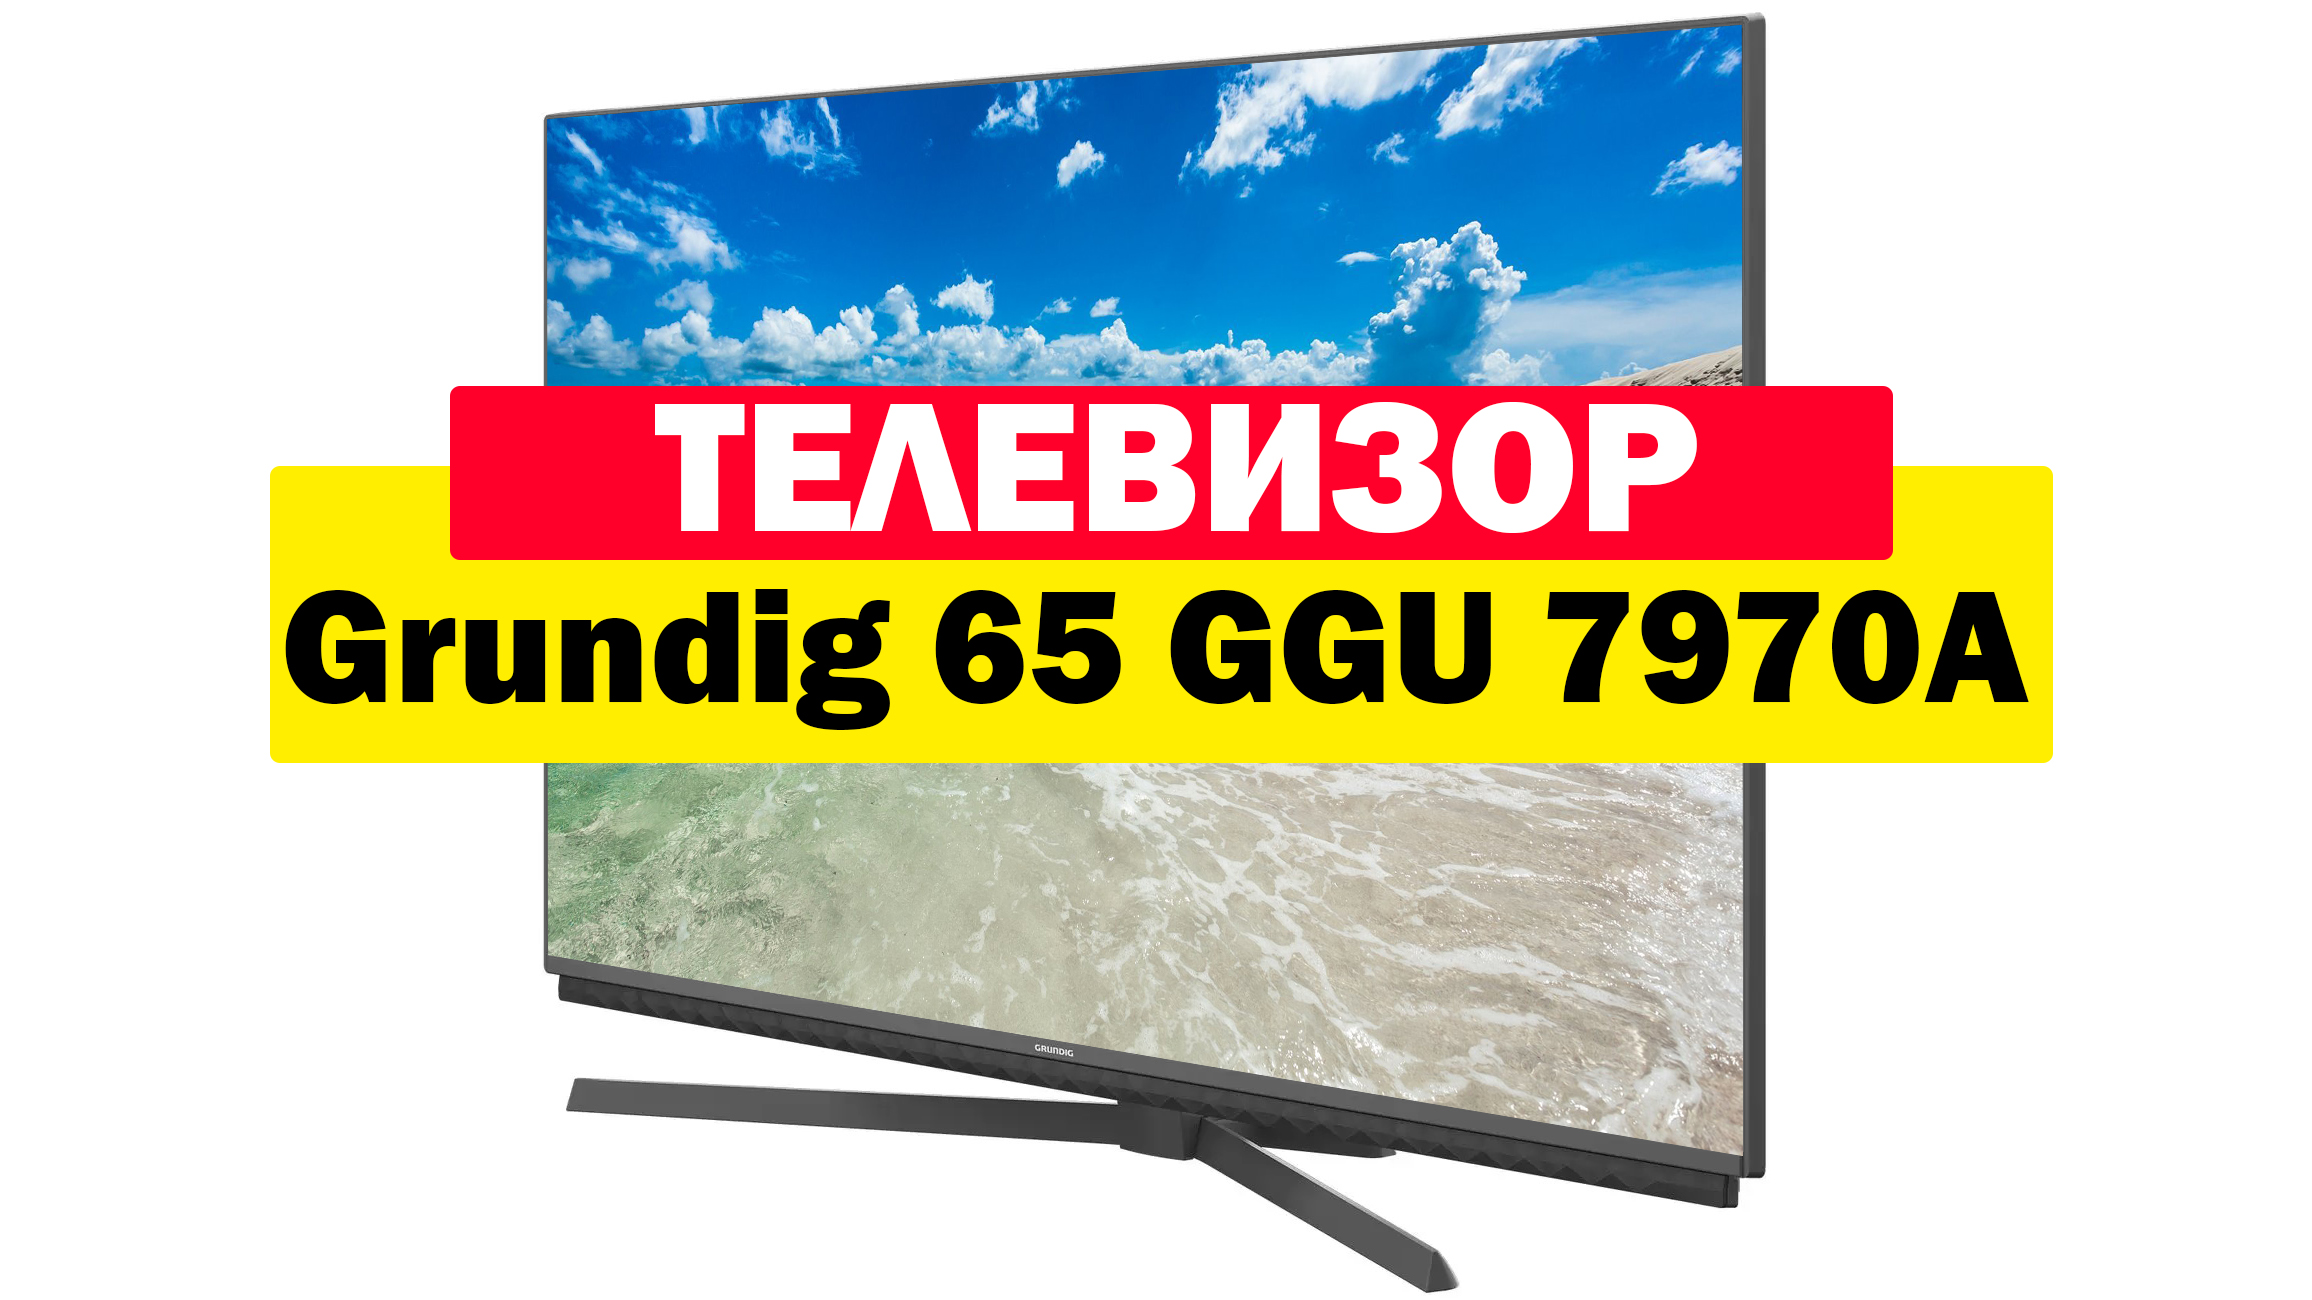 Grundig телевизор 7900b 65. Grundig 65. Grundig телевизор. Телевизор Grundig 65 GGU 8960. Телевизор Grundig ggu7970a.